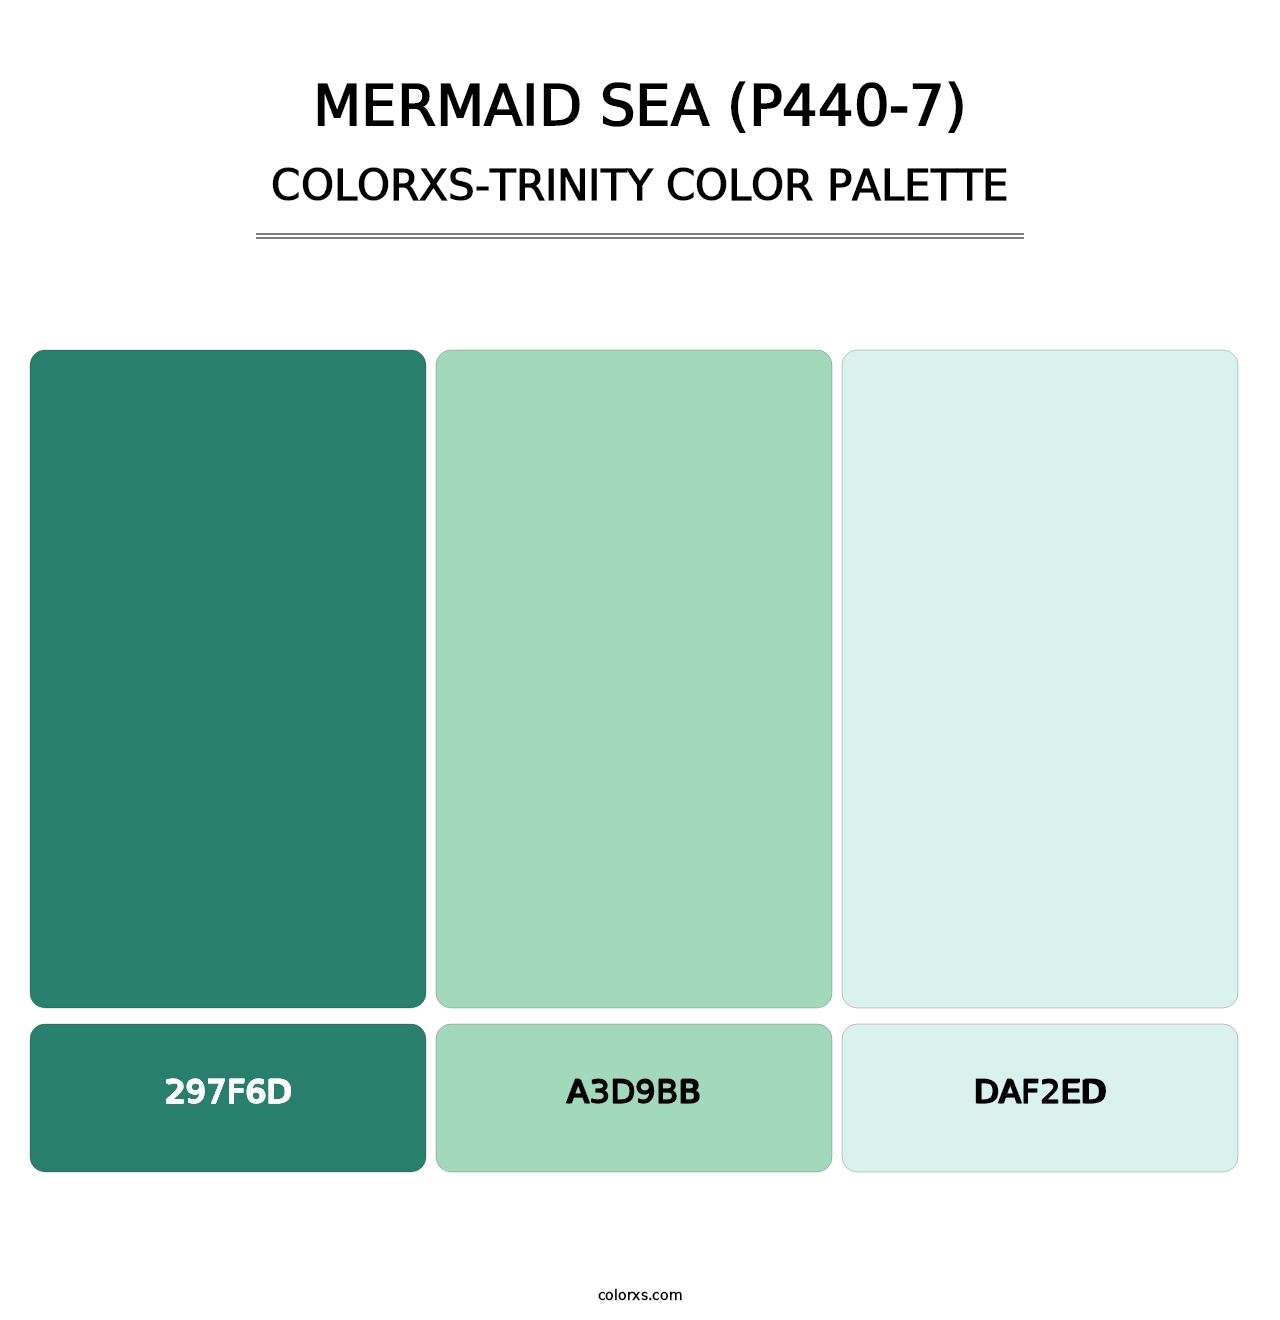 Mermaid Sea (P440-7) - Colorxs Trinity Palette